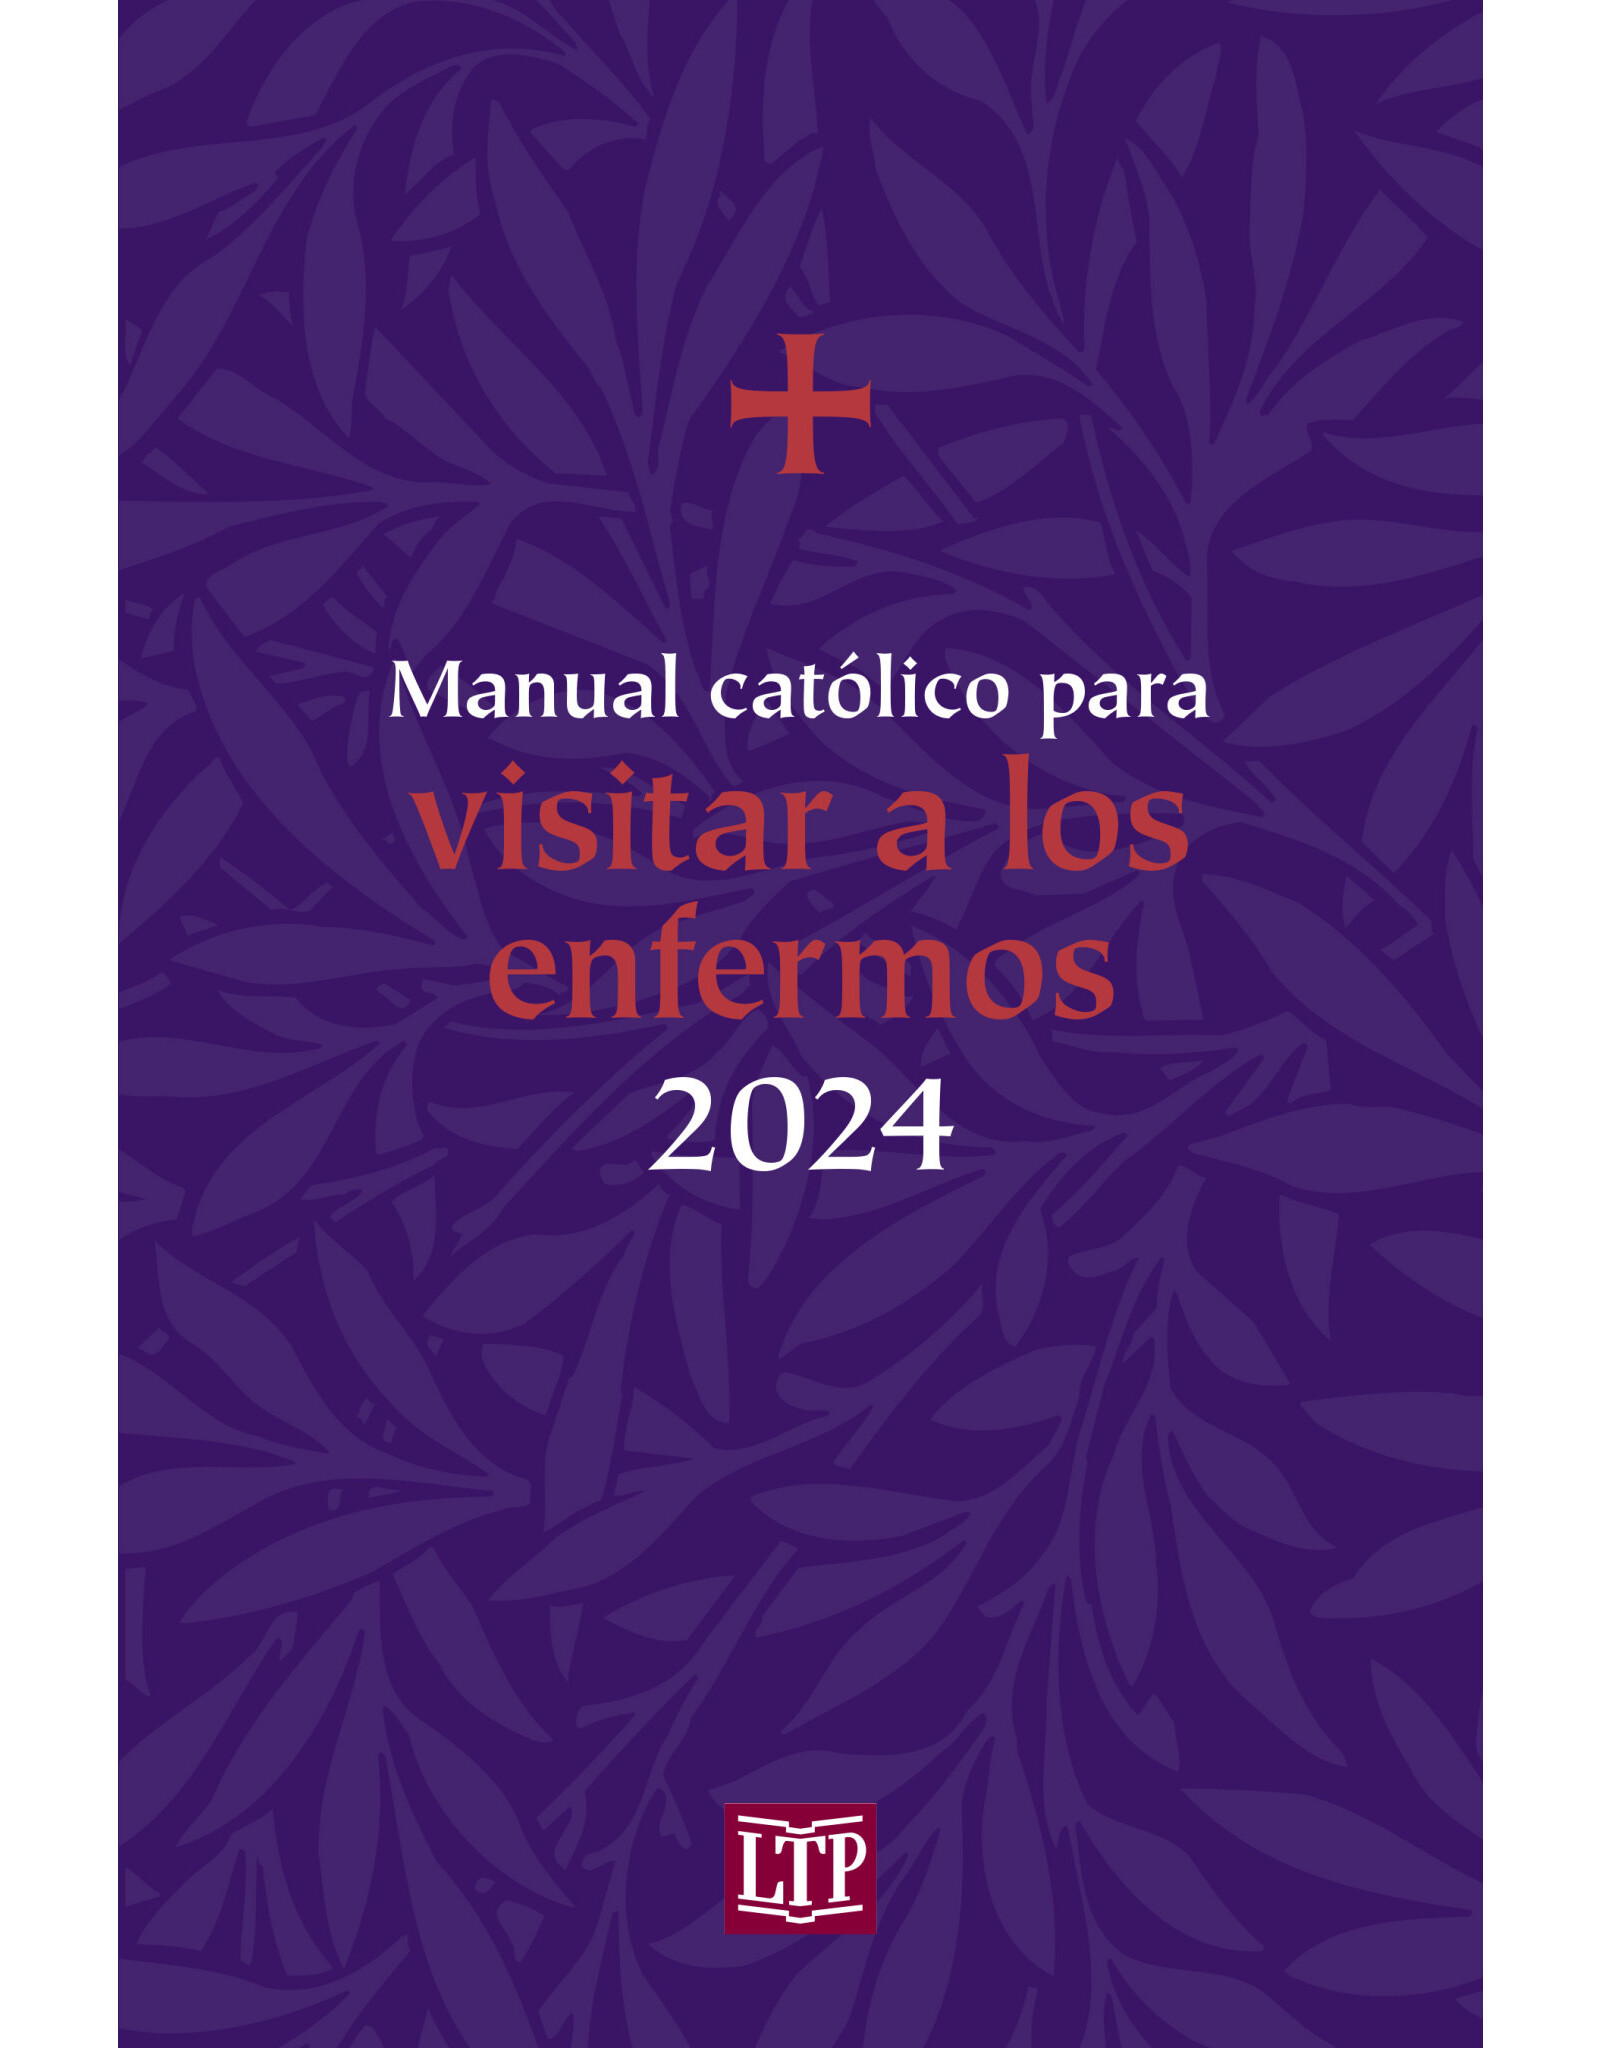 LTP (Liturgy Training Publications) 2024 Manual Catolico para Visitar a los Enfermos (Catholic Handbook for Visiting the Sick)